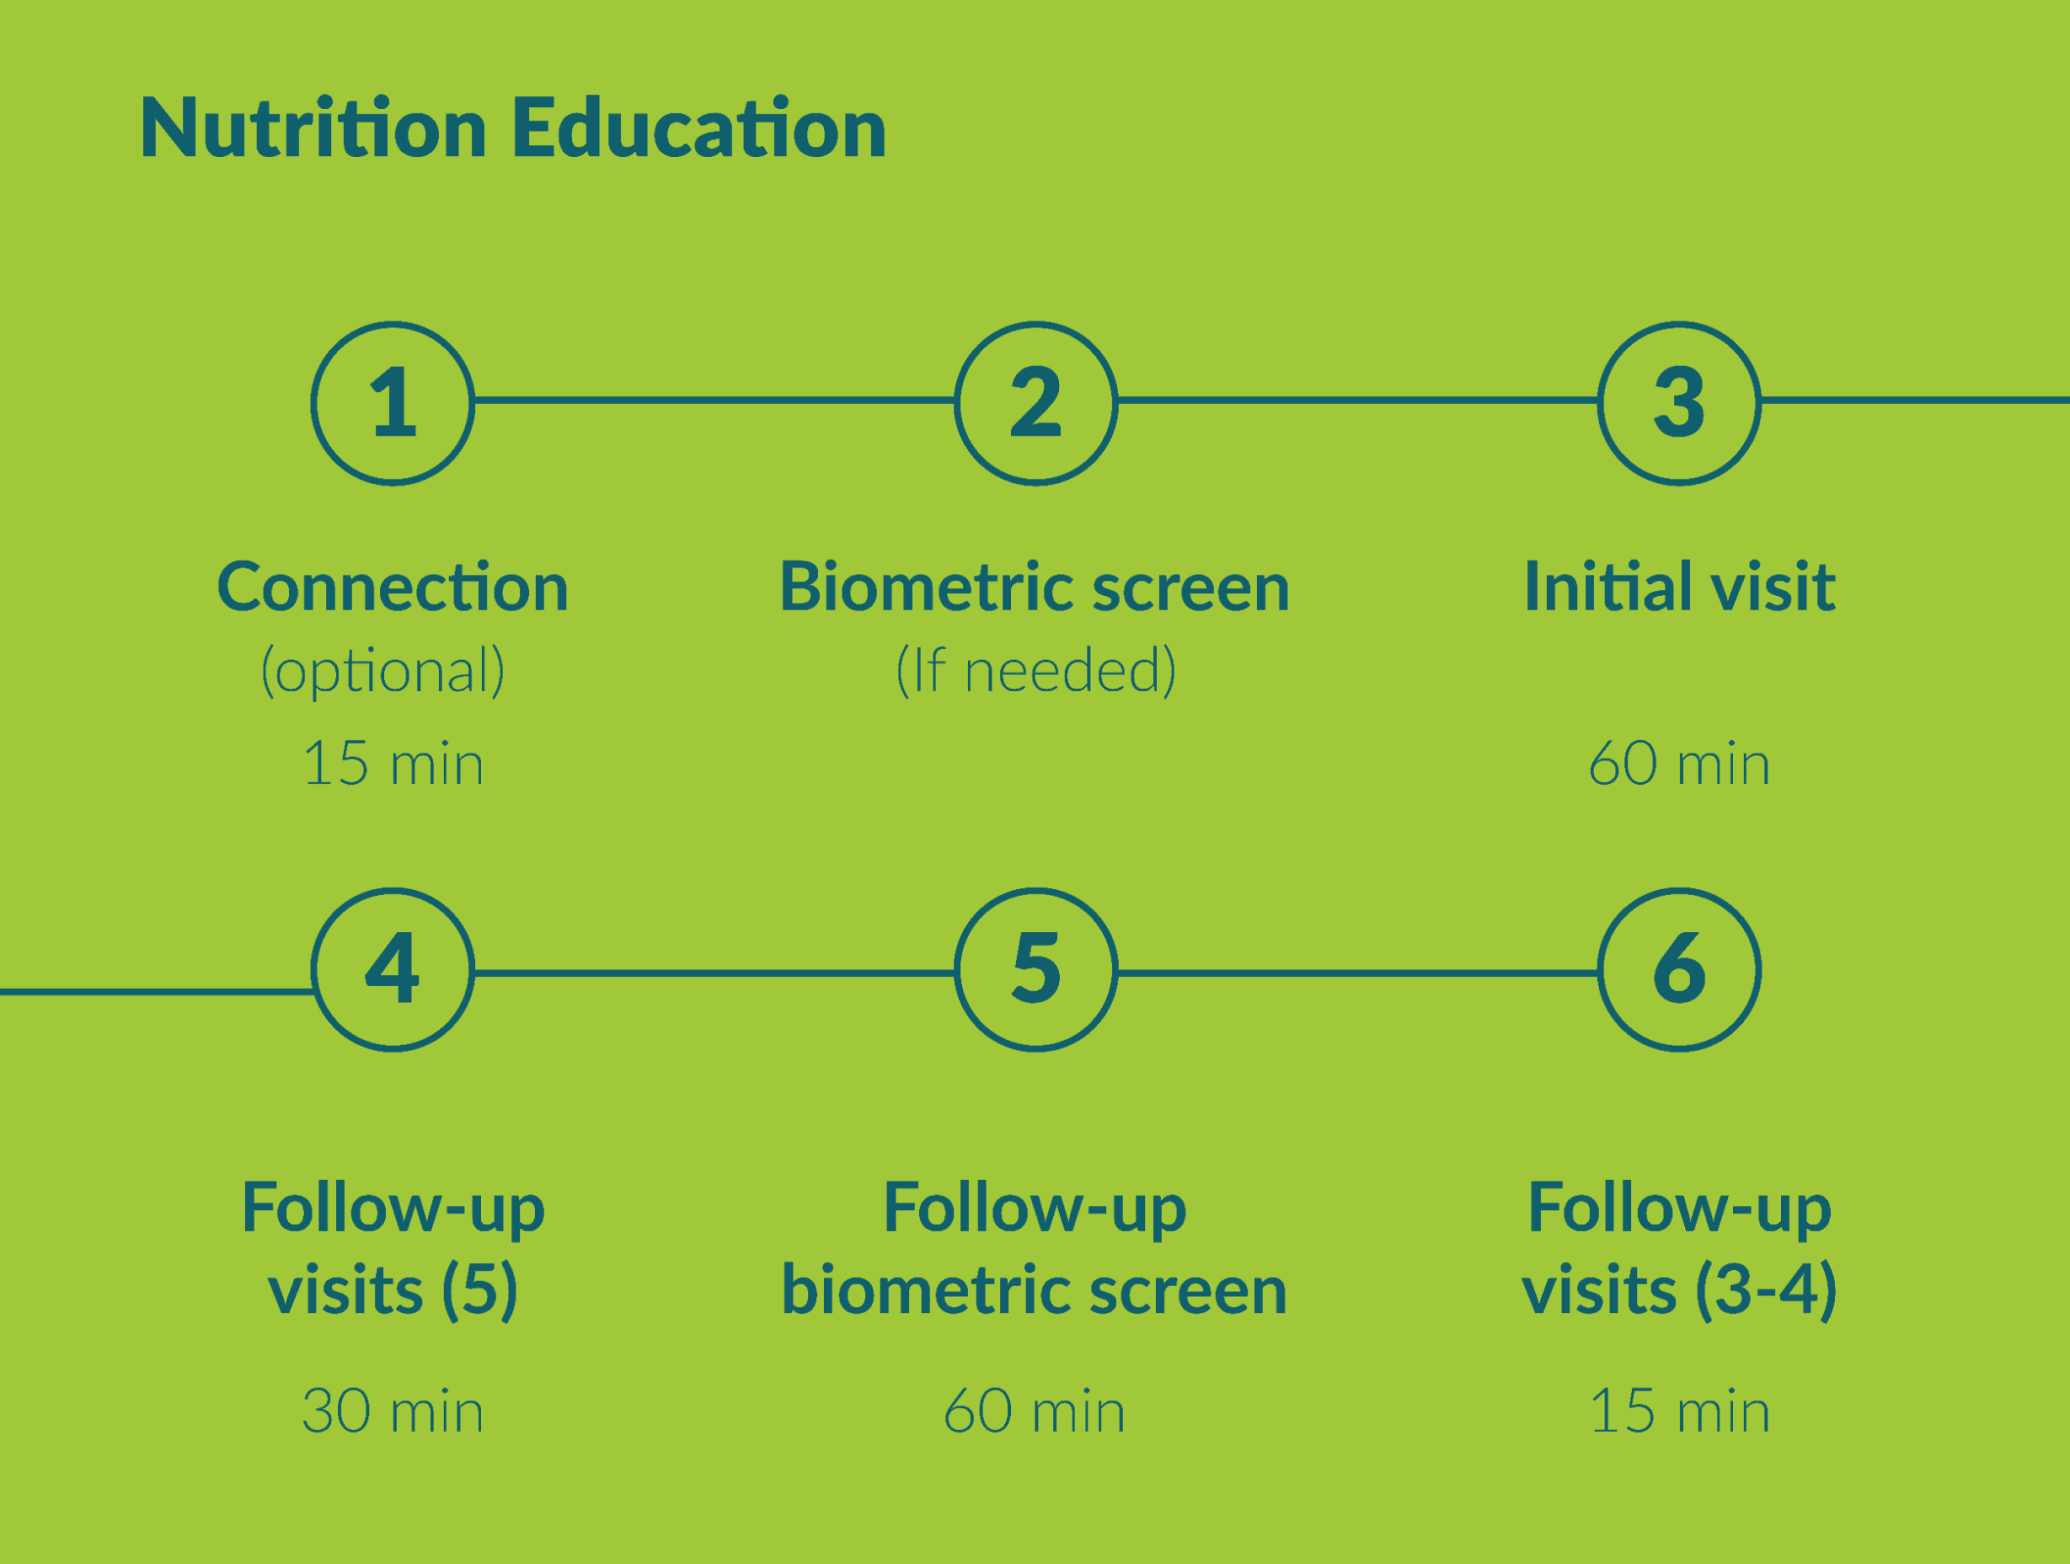 Nutrition Education